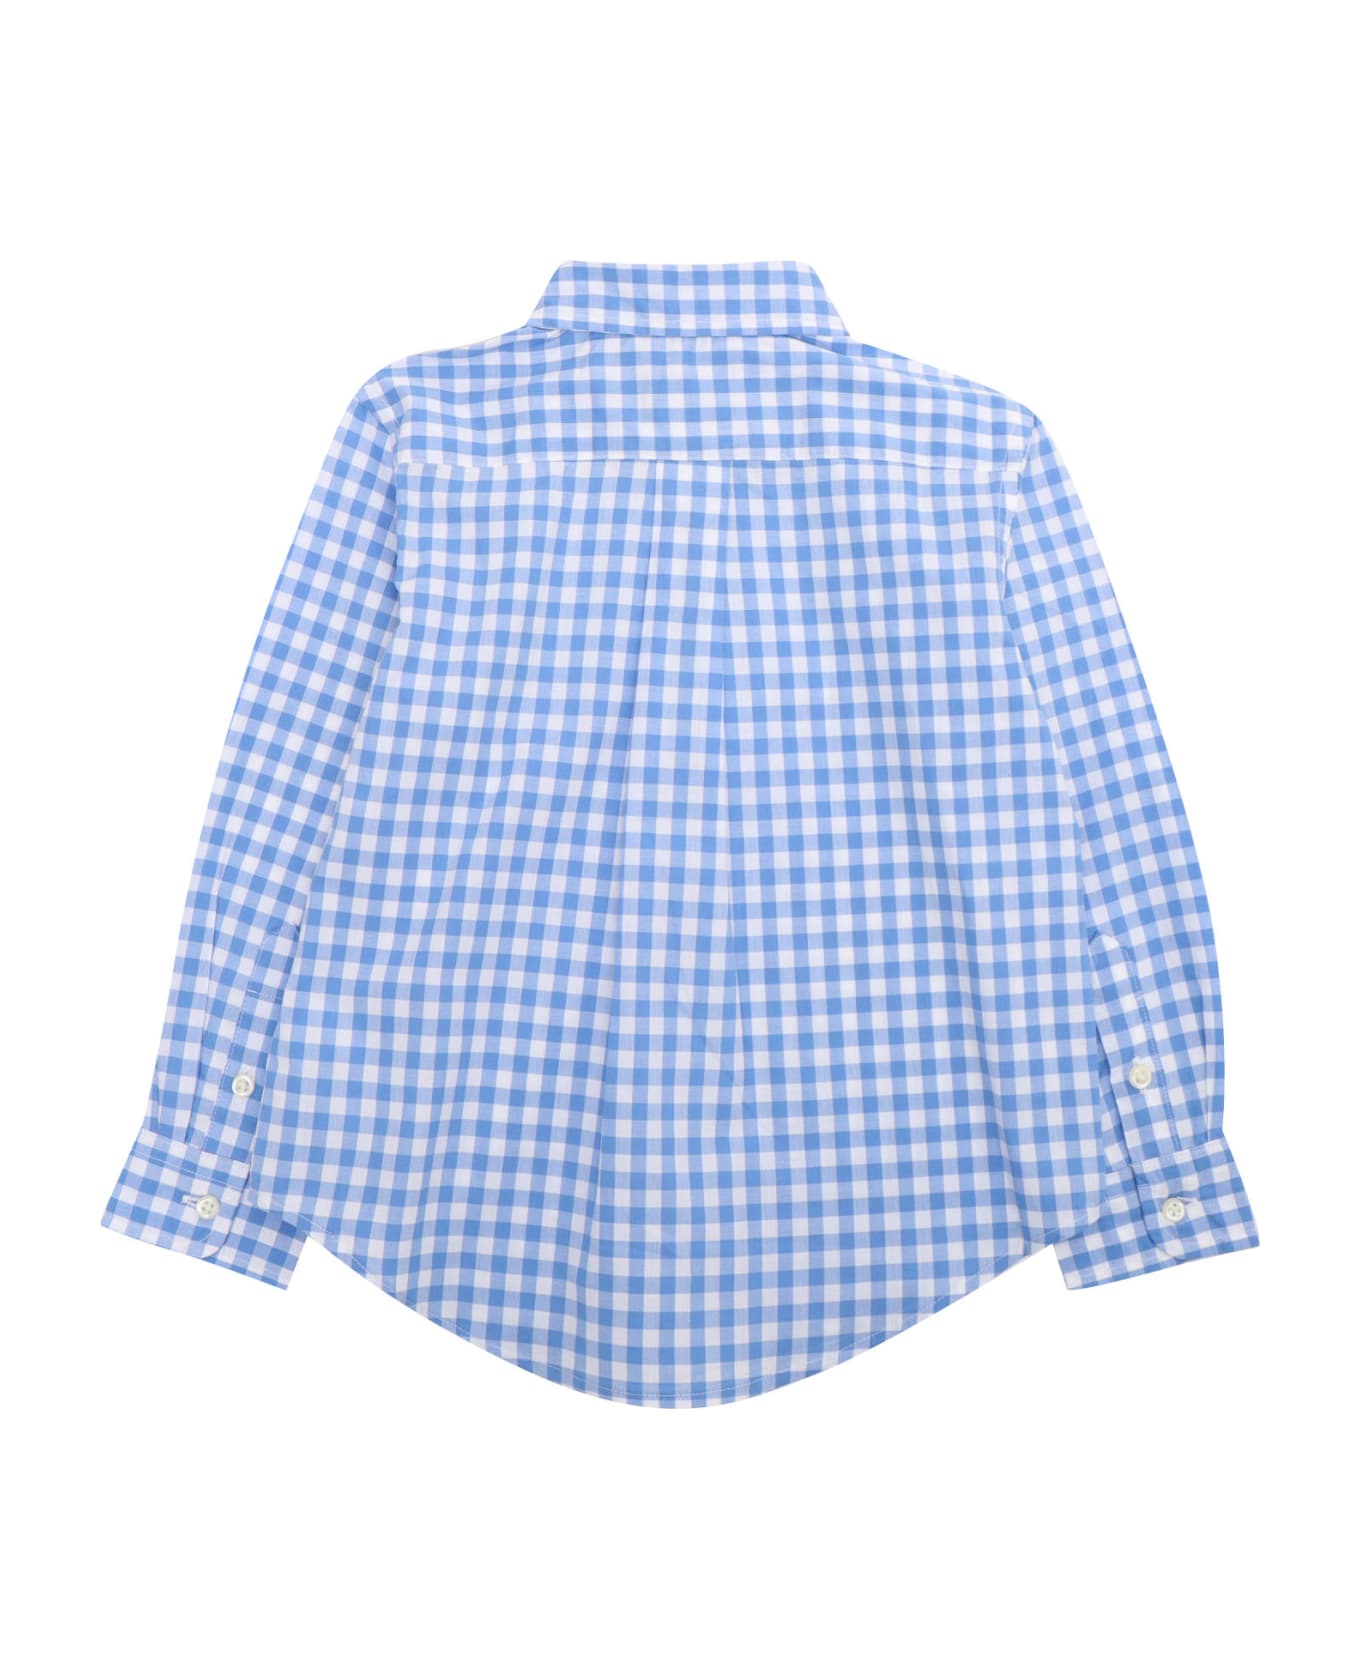 Polo Ralph Lauren Checked Cotton Shirt - BLUE